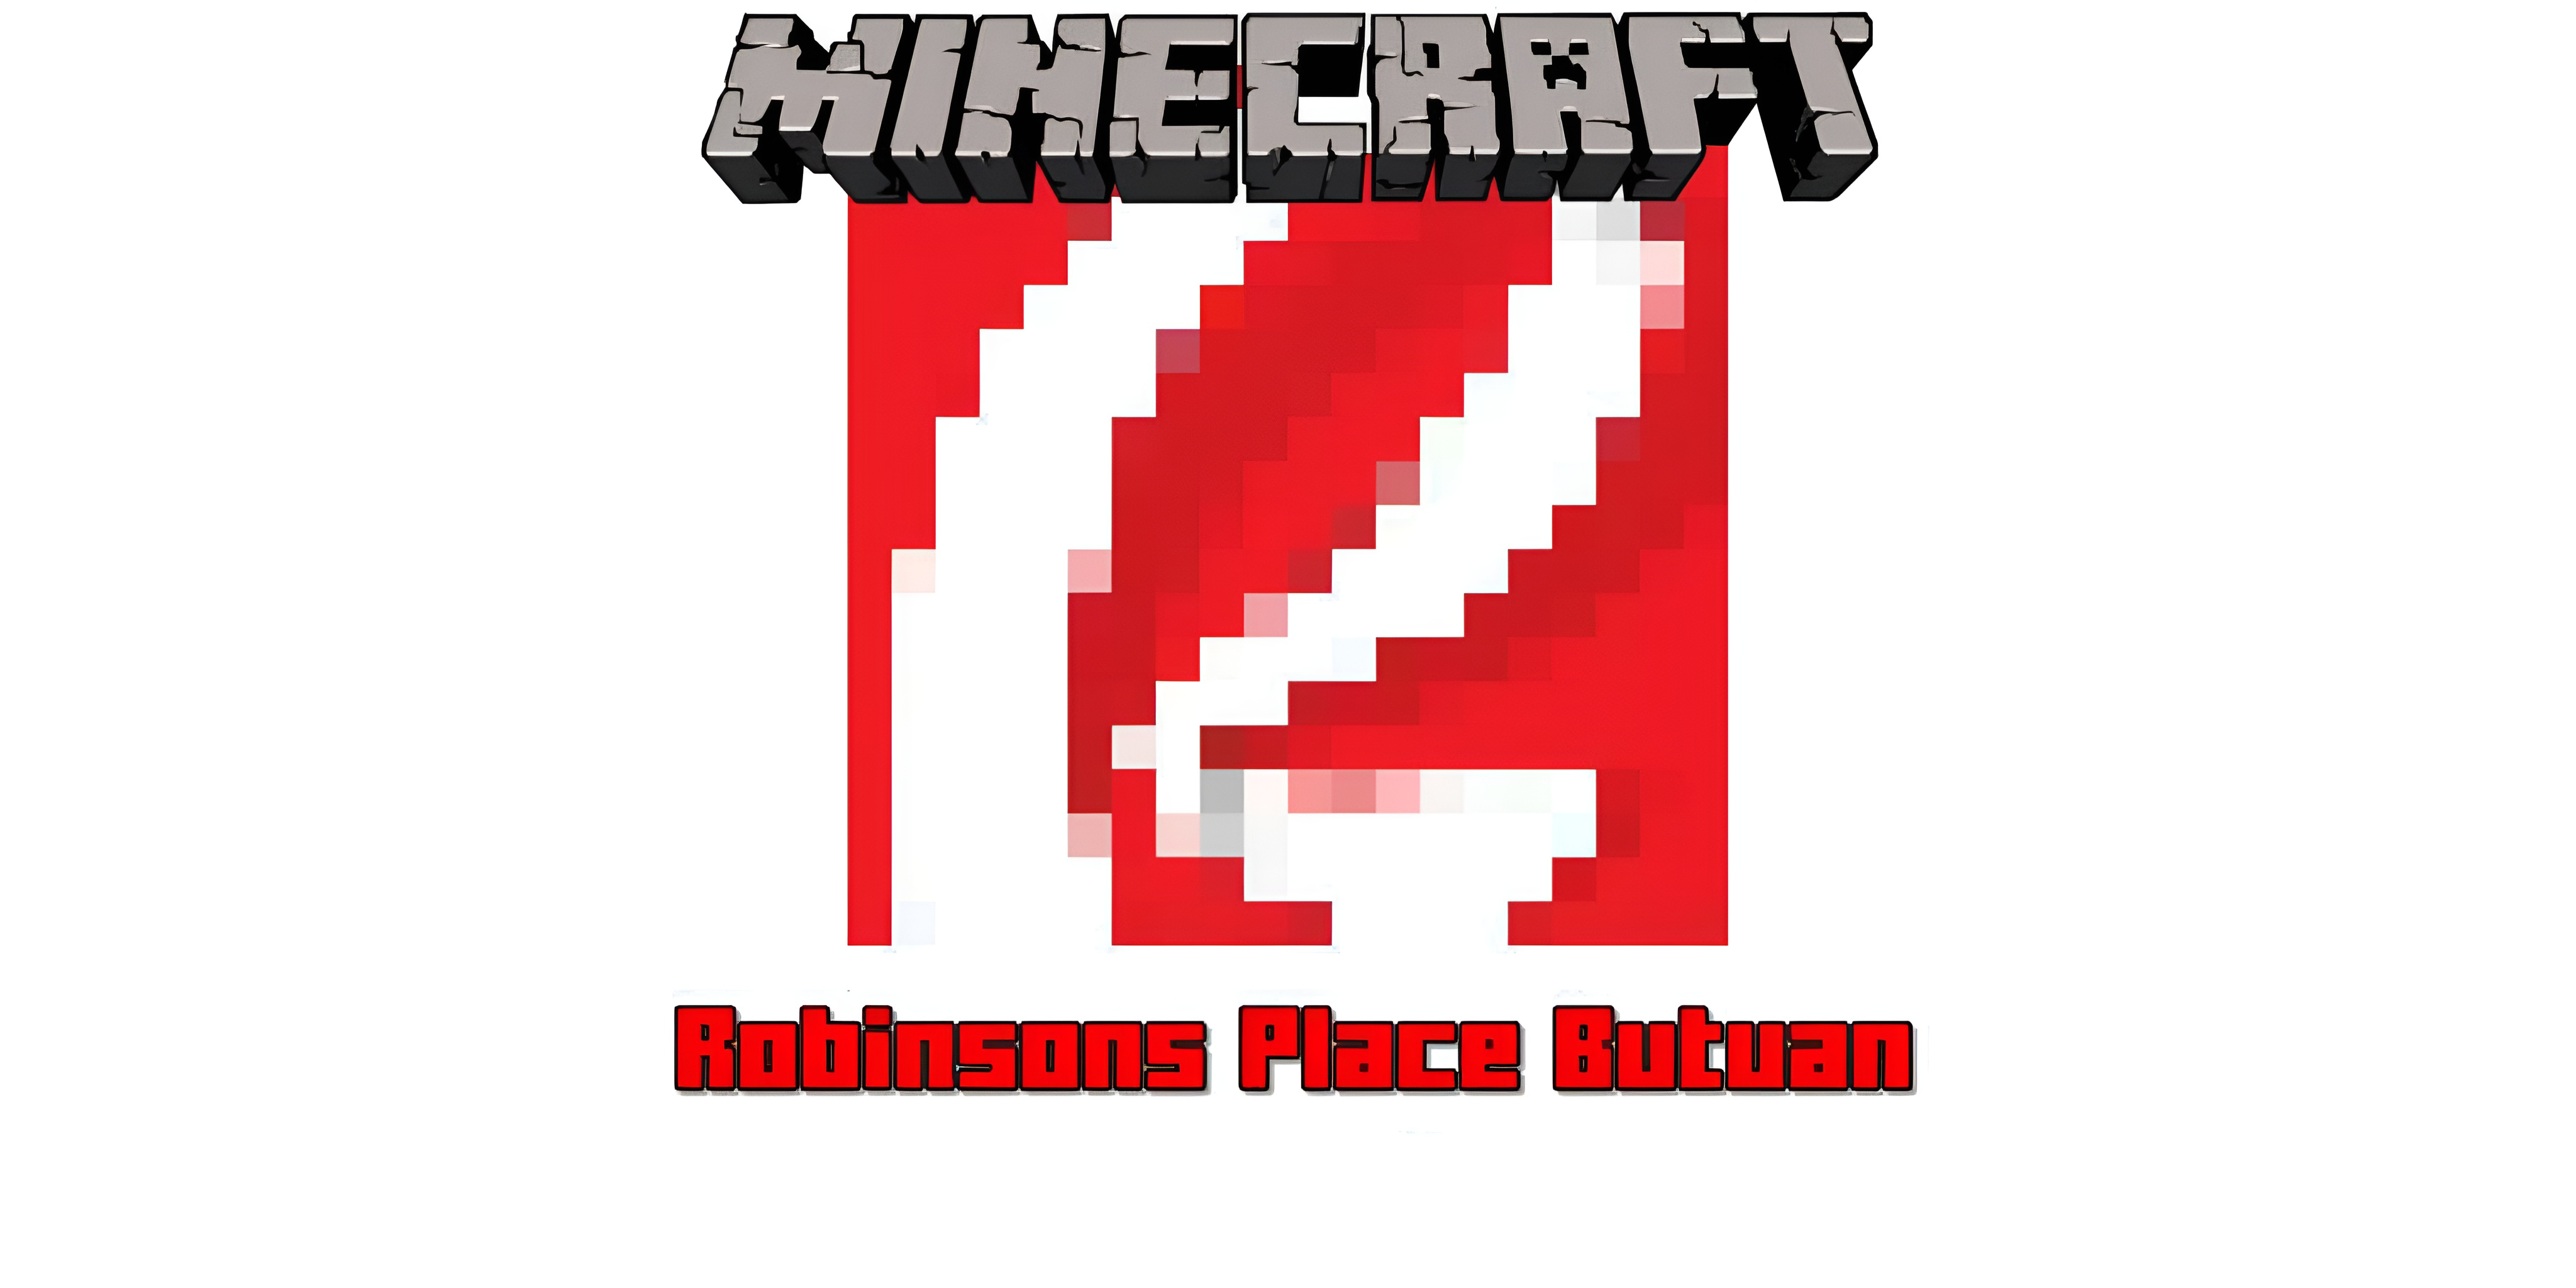 Robinsons Place Butuan Minecraft Logo by JumperJoleo123 on DeviantArt